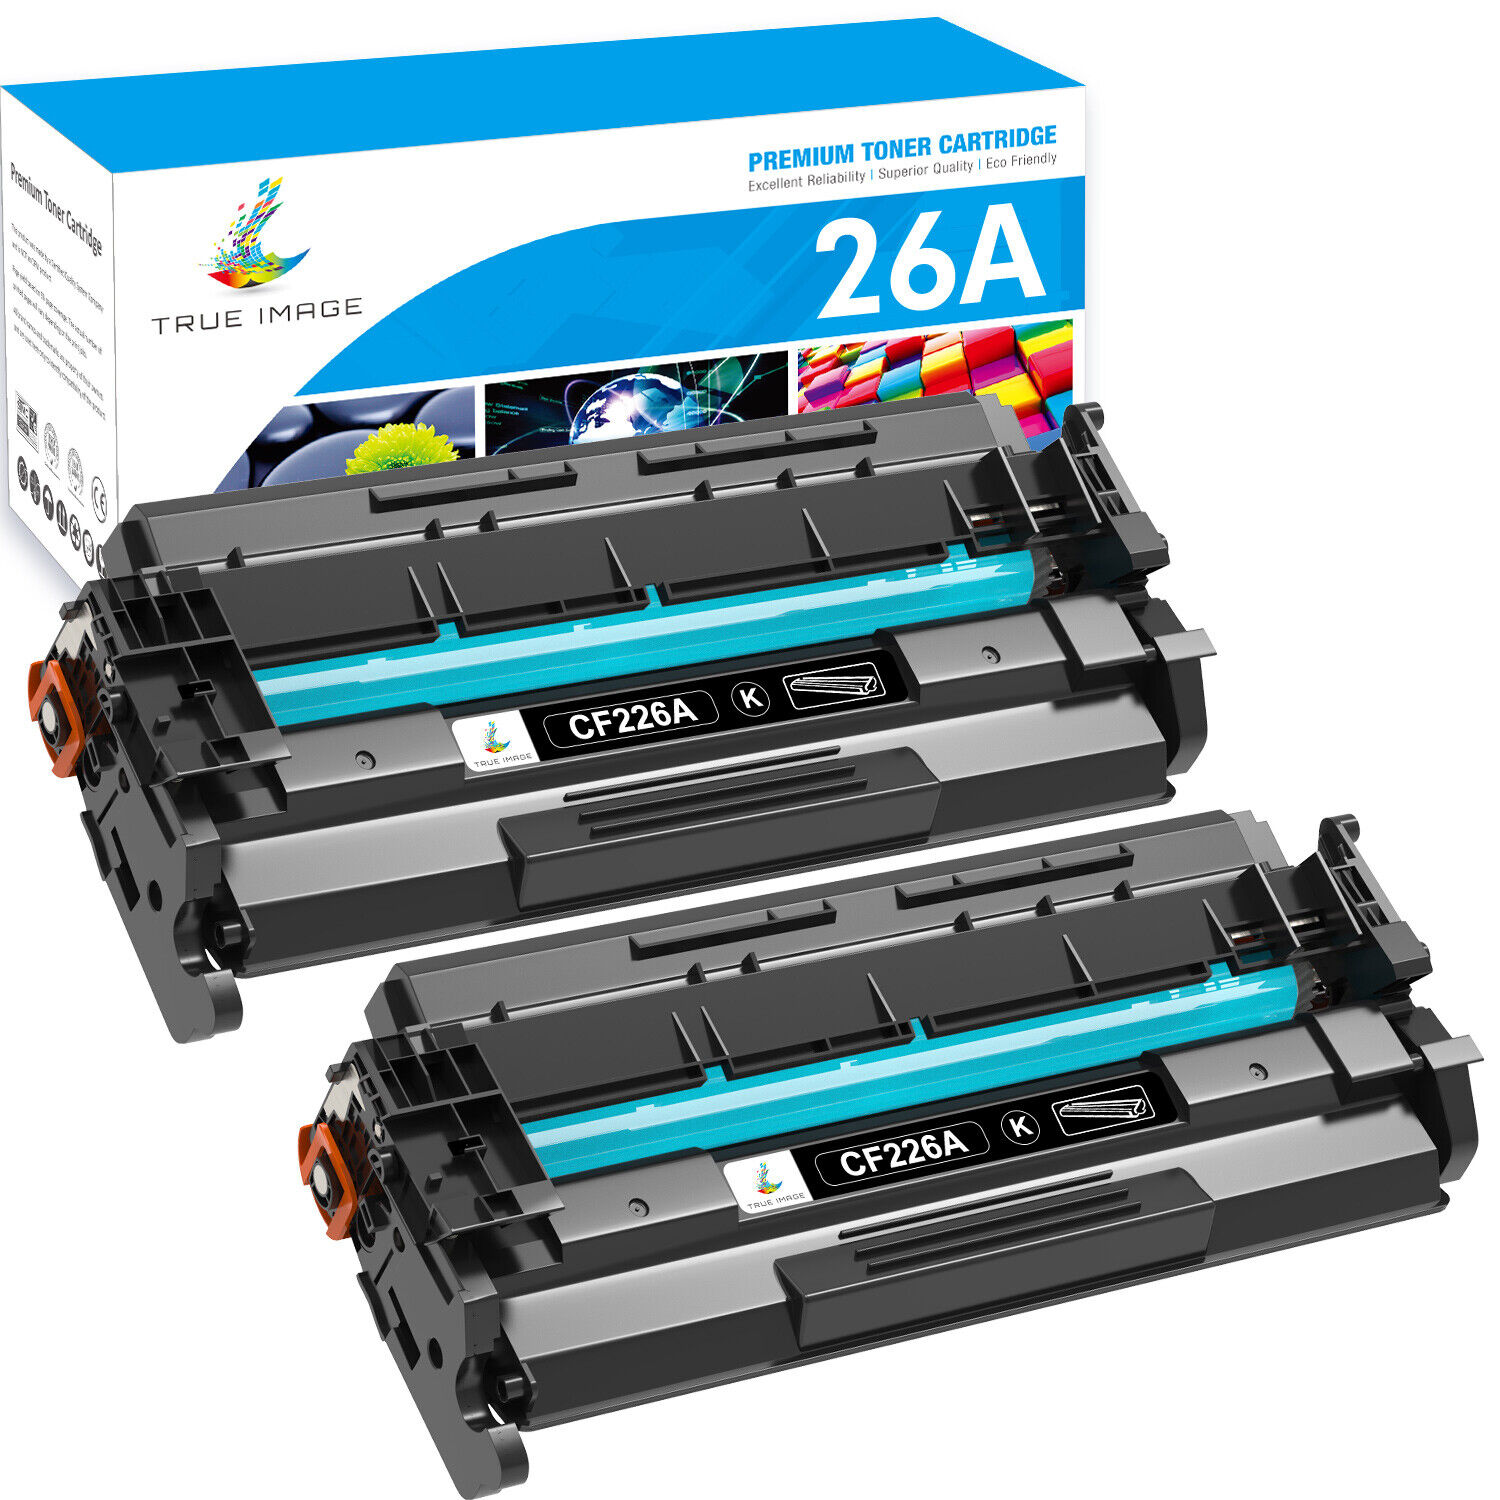 2× CF226A Ink Toner Cartridges fits HP 26A LaserJet Pro M402dn M426fdw MFP Black